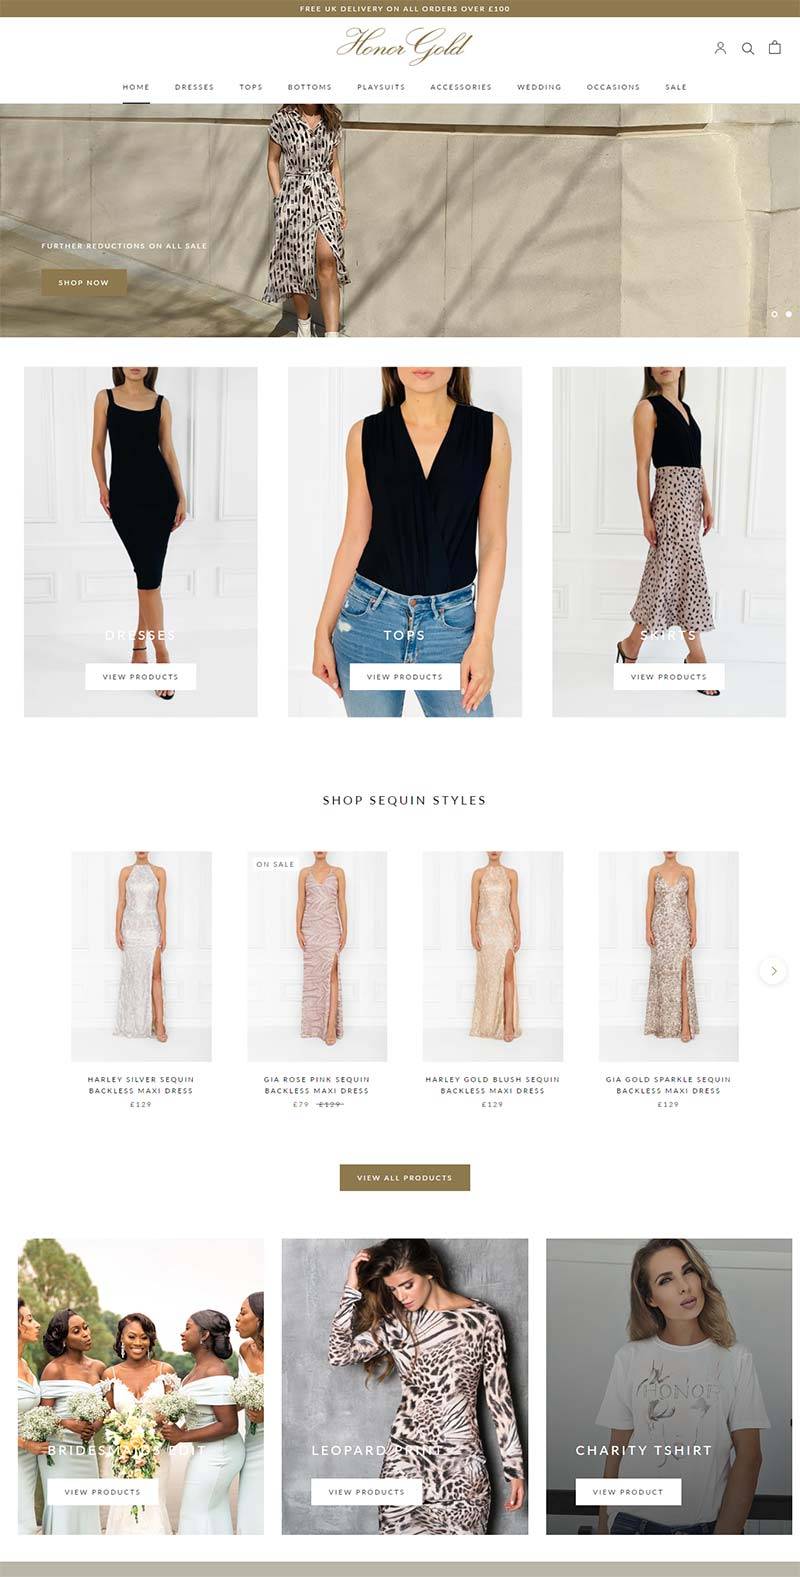 Honor Gold 英国奢华女装品牌购物网站